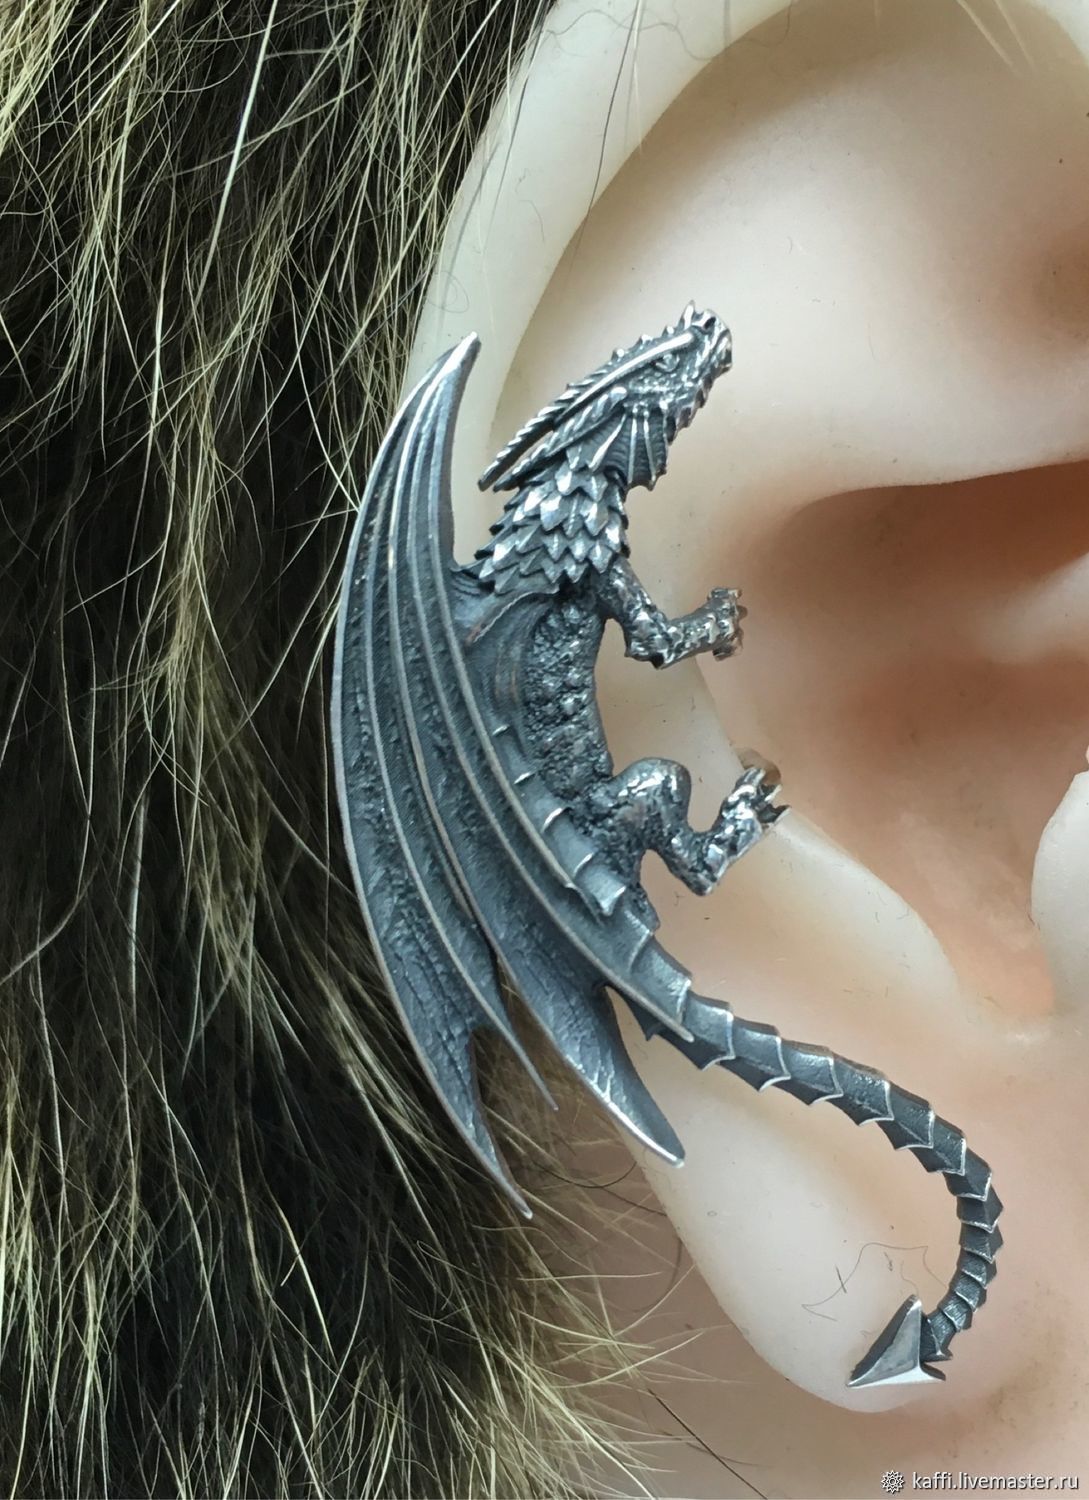 Кафф дракон на ухо. Каффы на уши дракон. Каффы драконы на правое ухо.